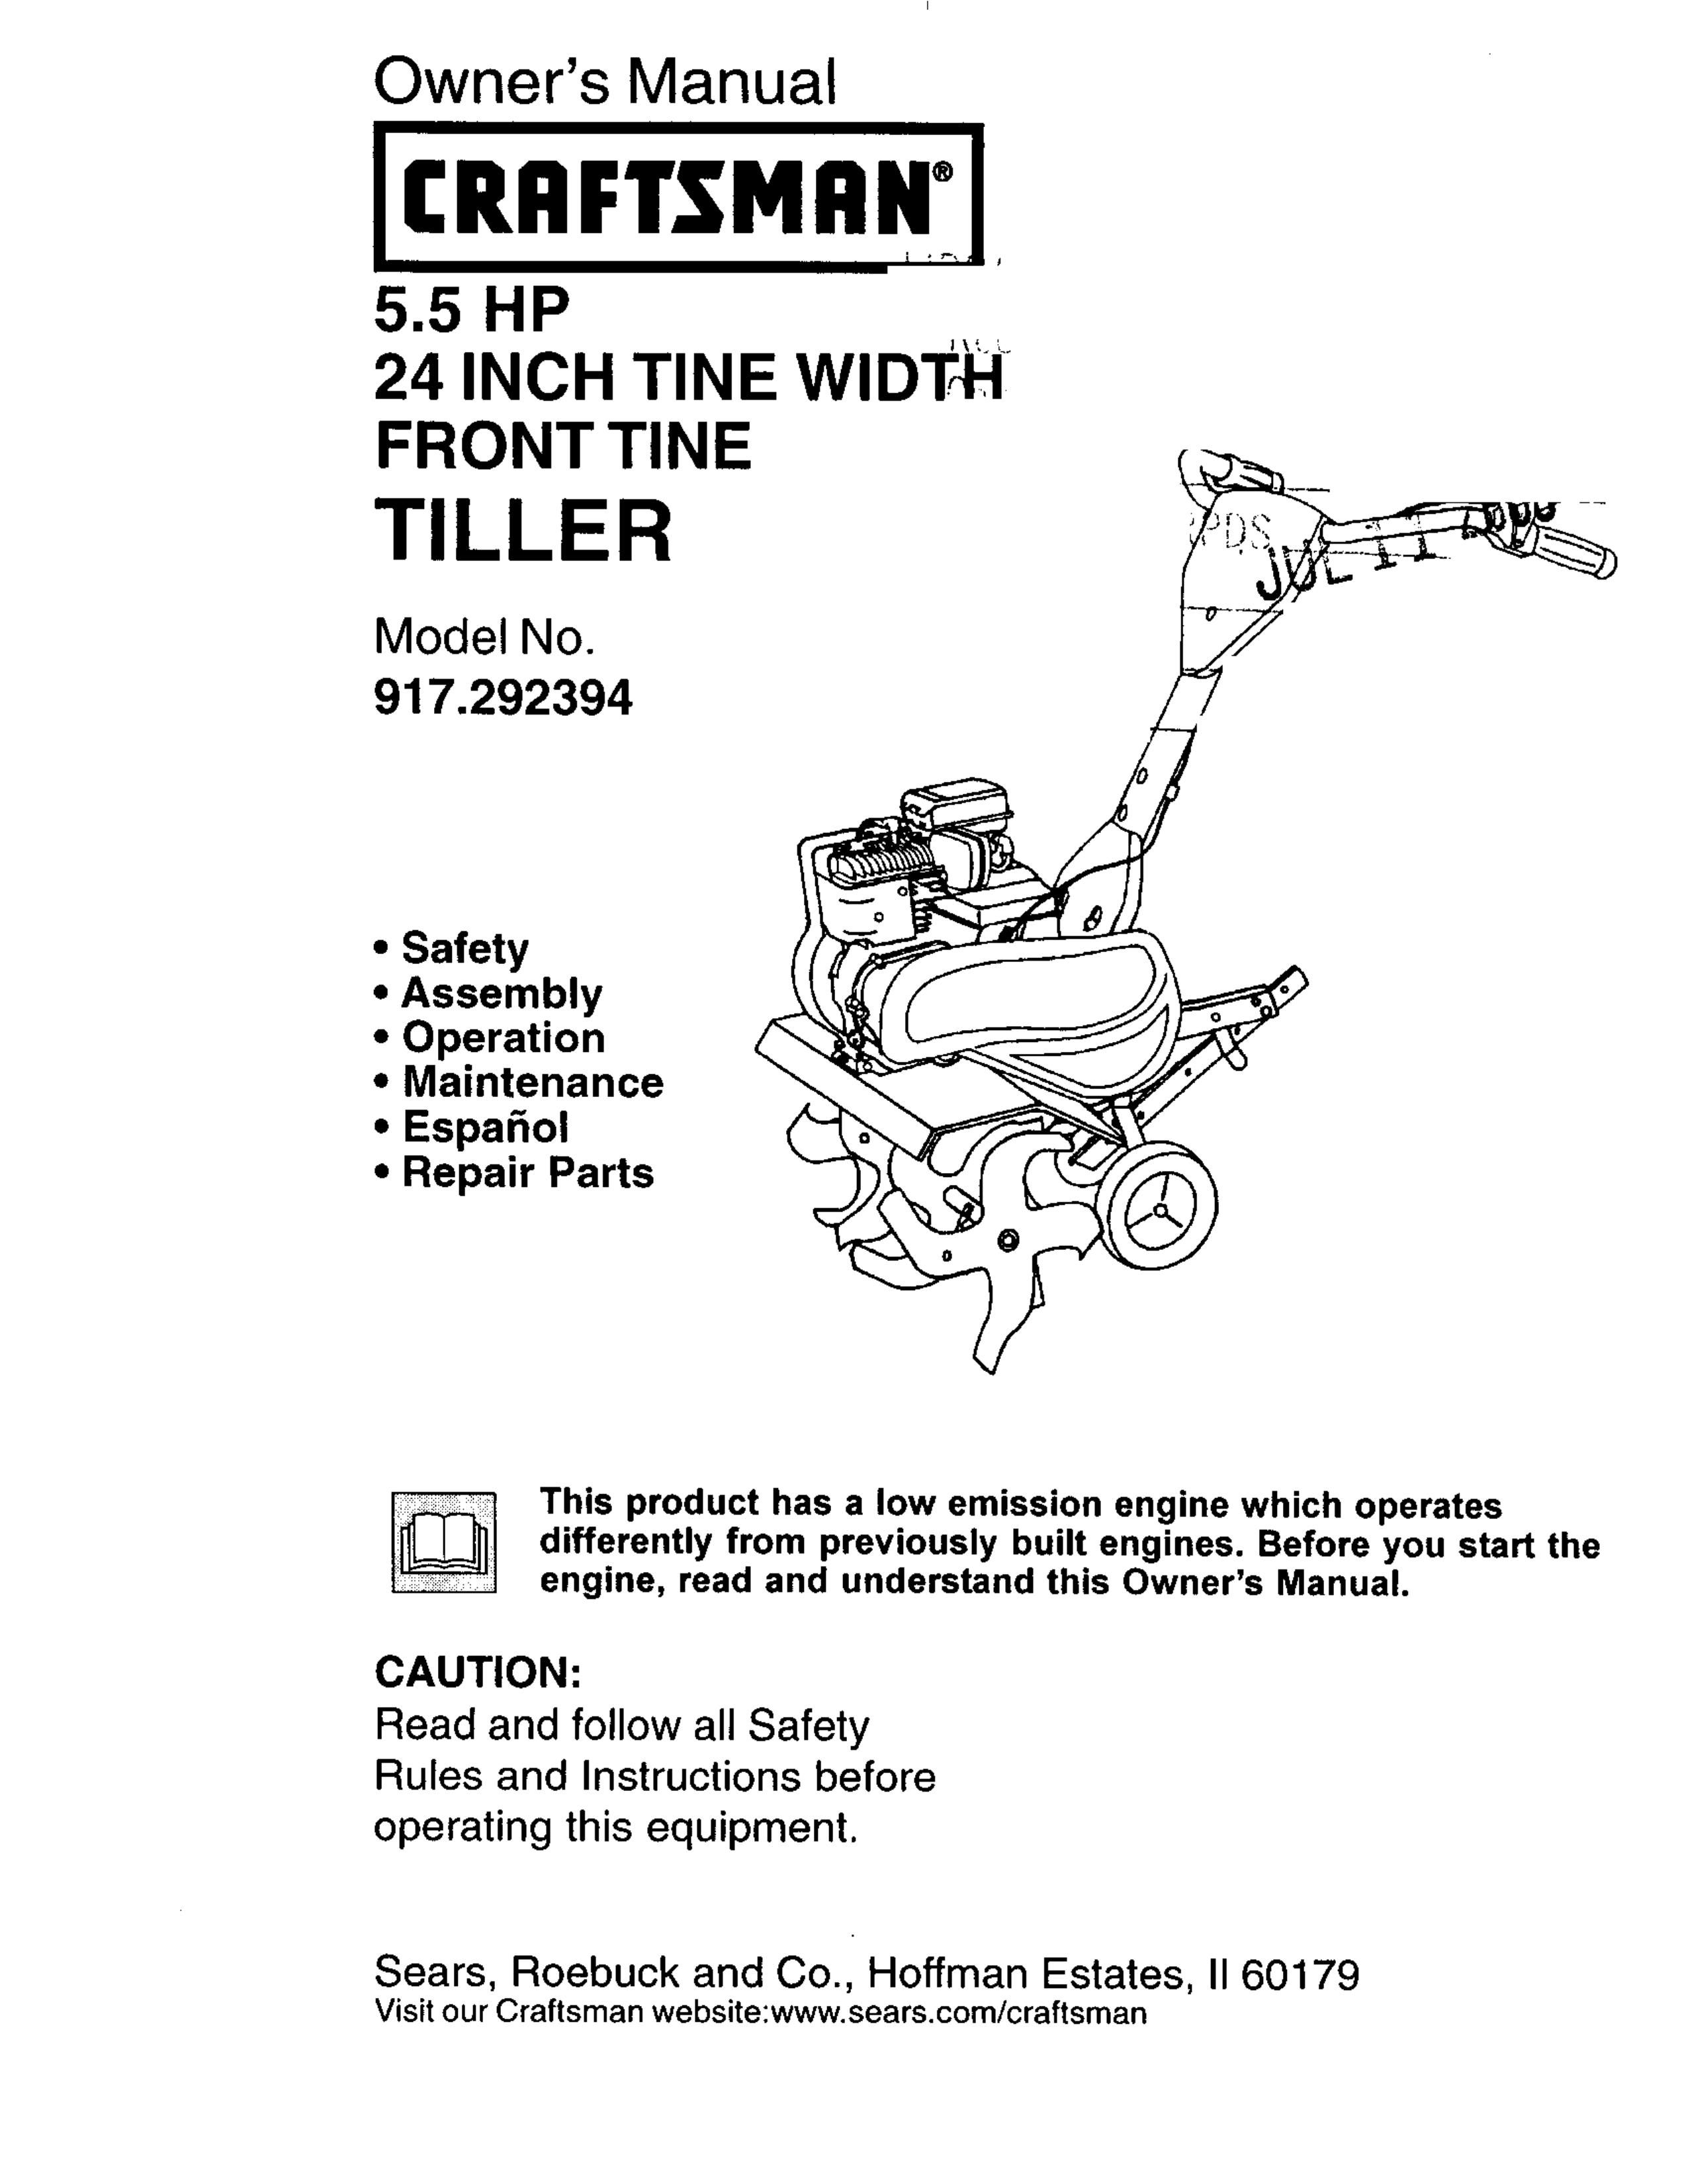 Craftsman 917.292394 Tiller User Manual